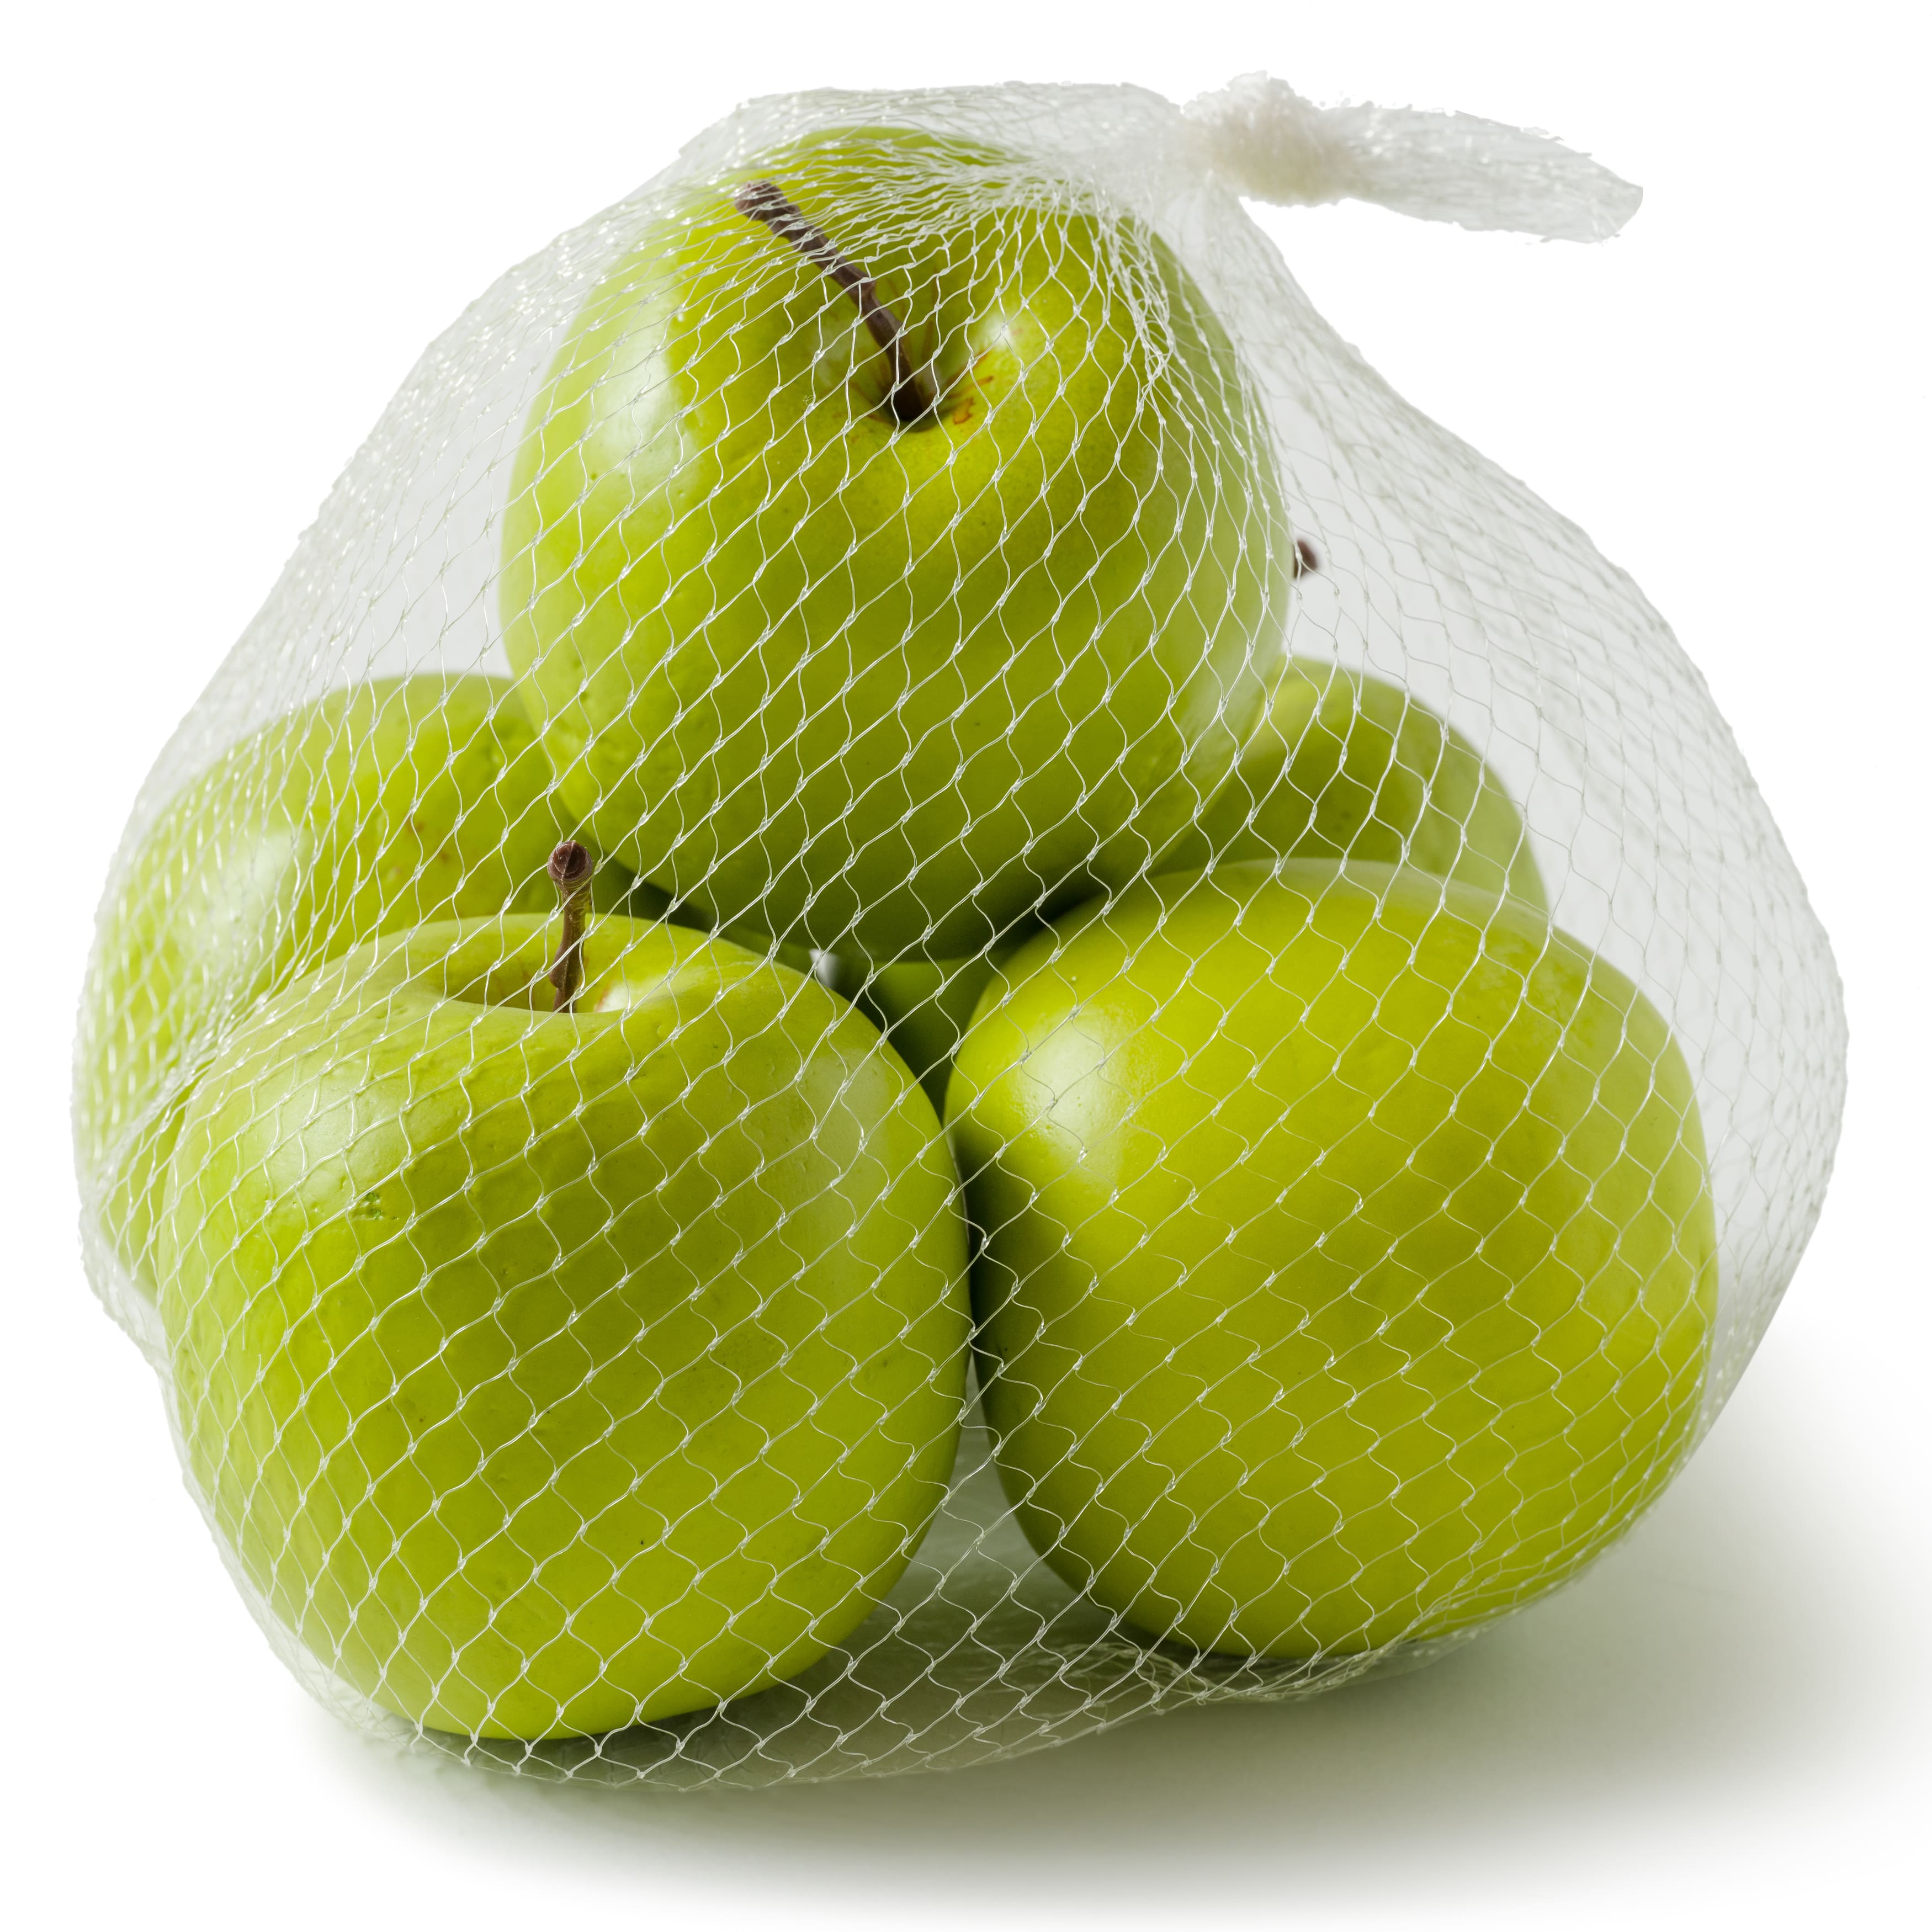 Organic Fuji Apples Bag at Whole Foods Market